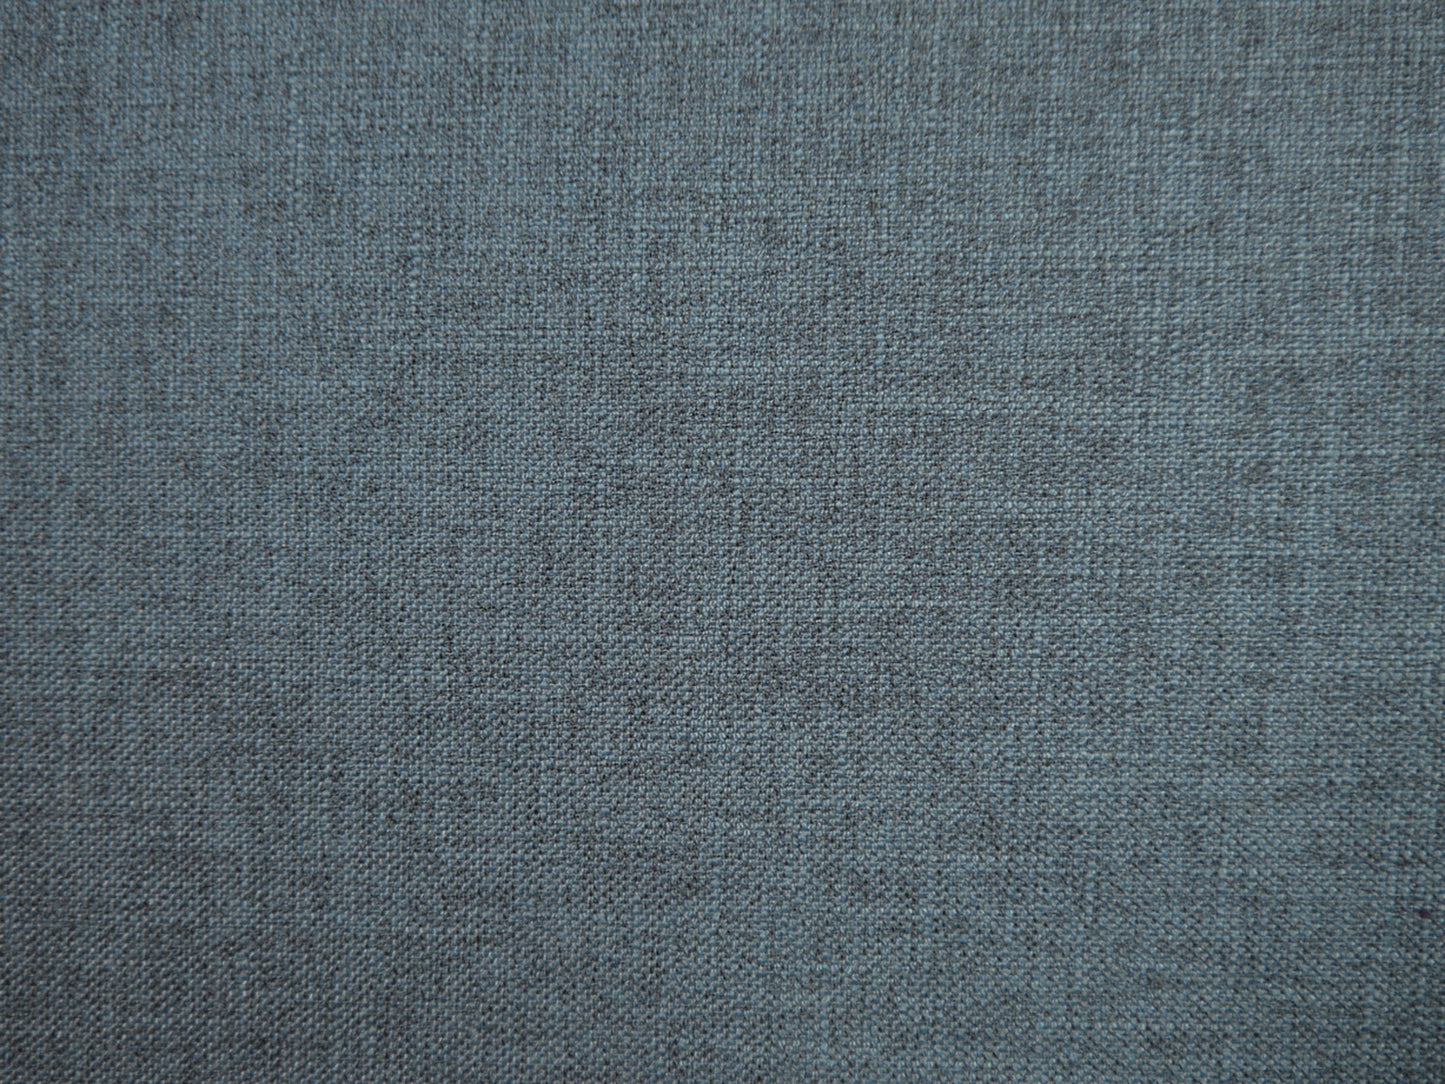 Bacio Fabric Samples - Rydan Interiors